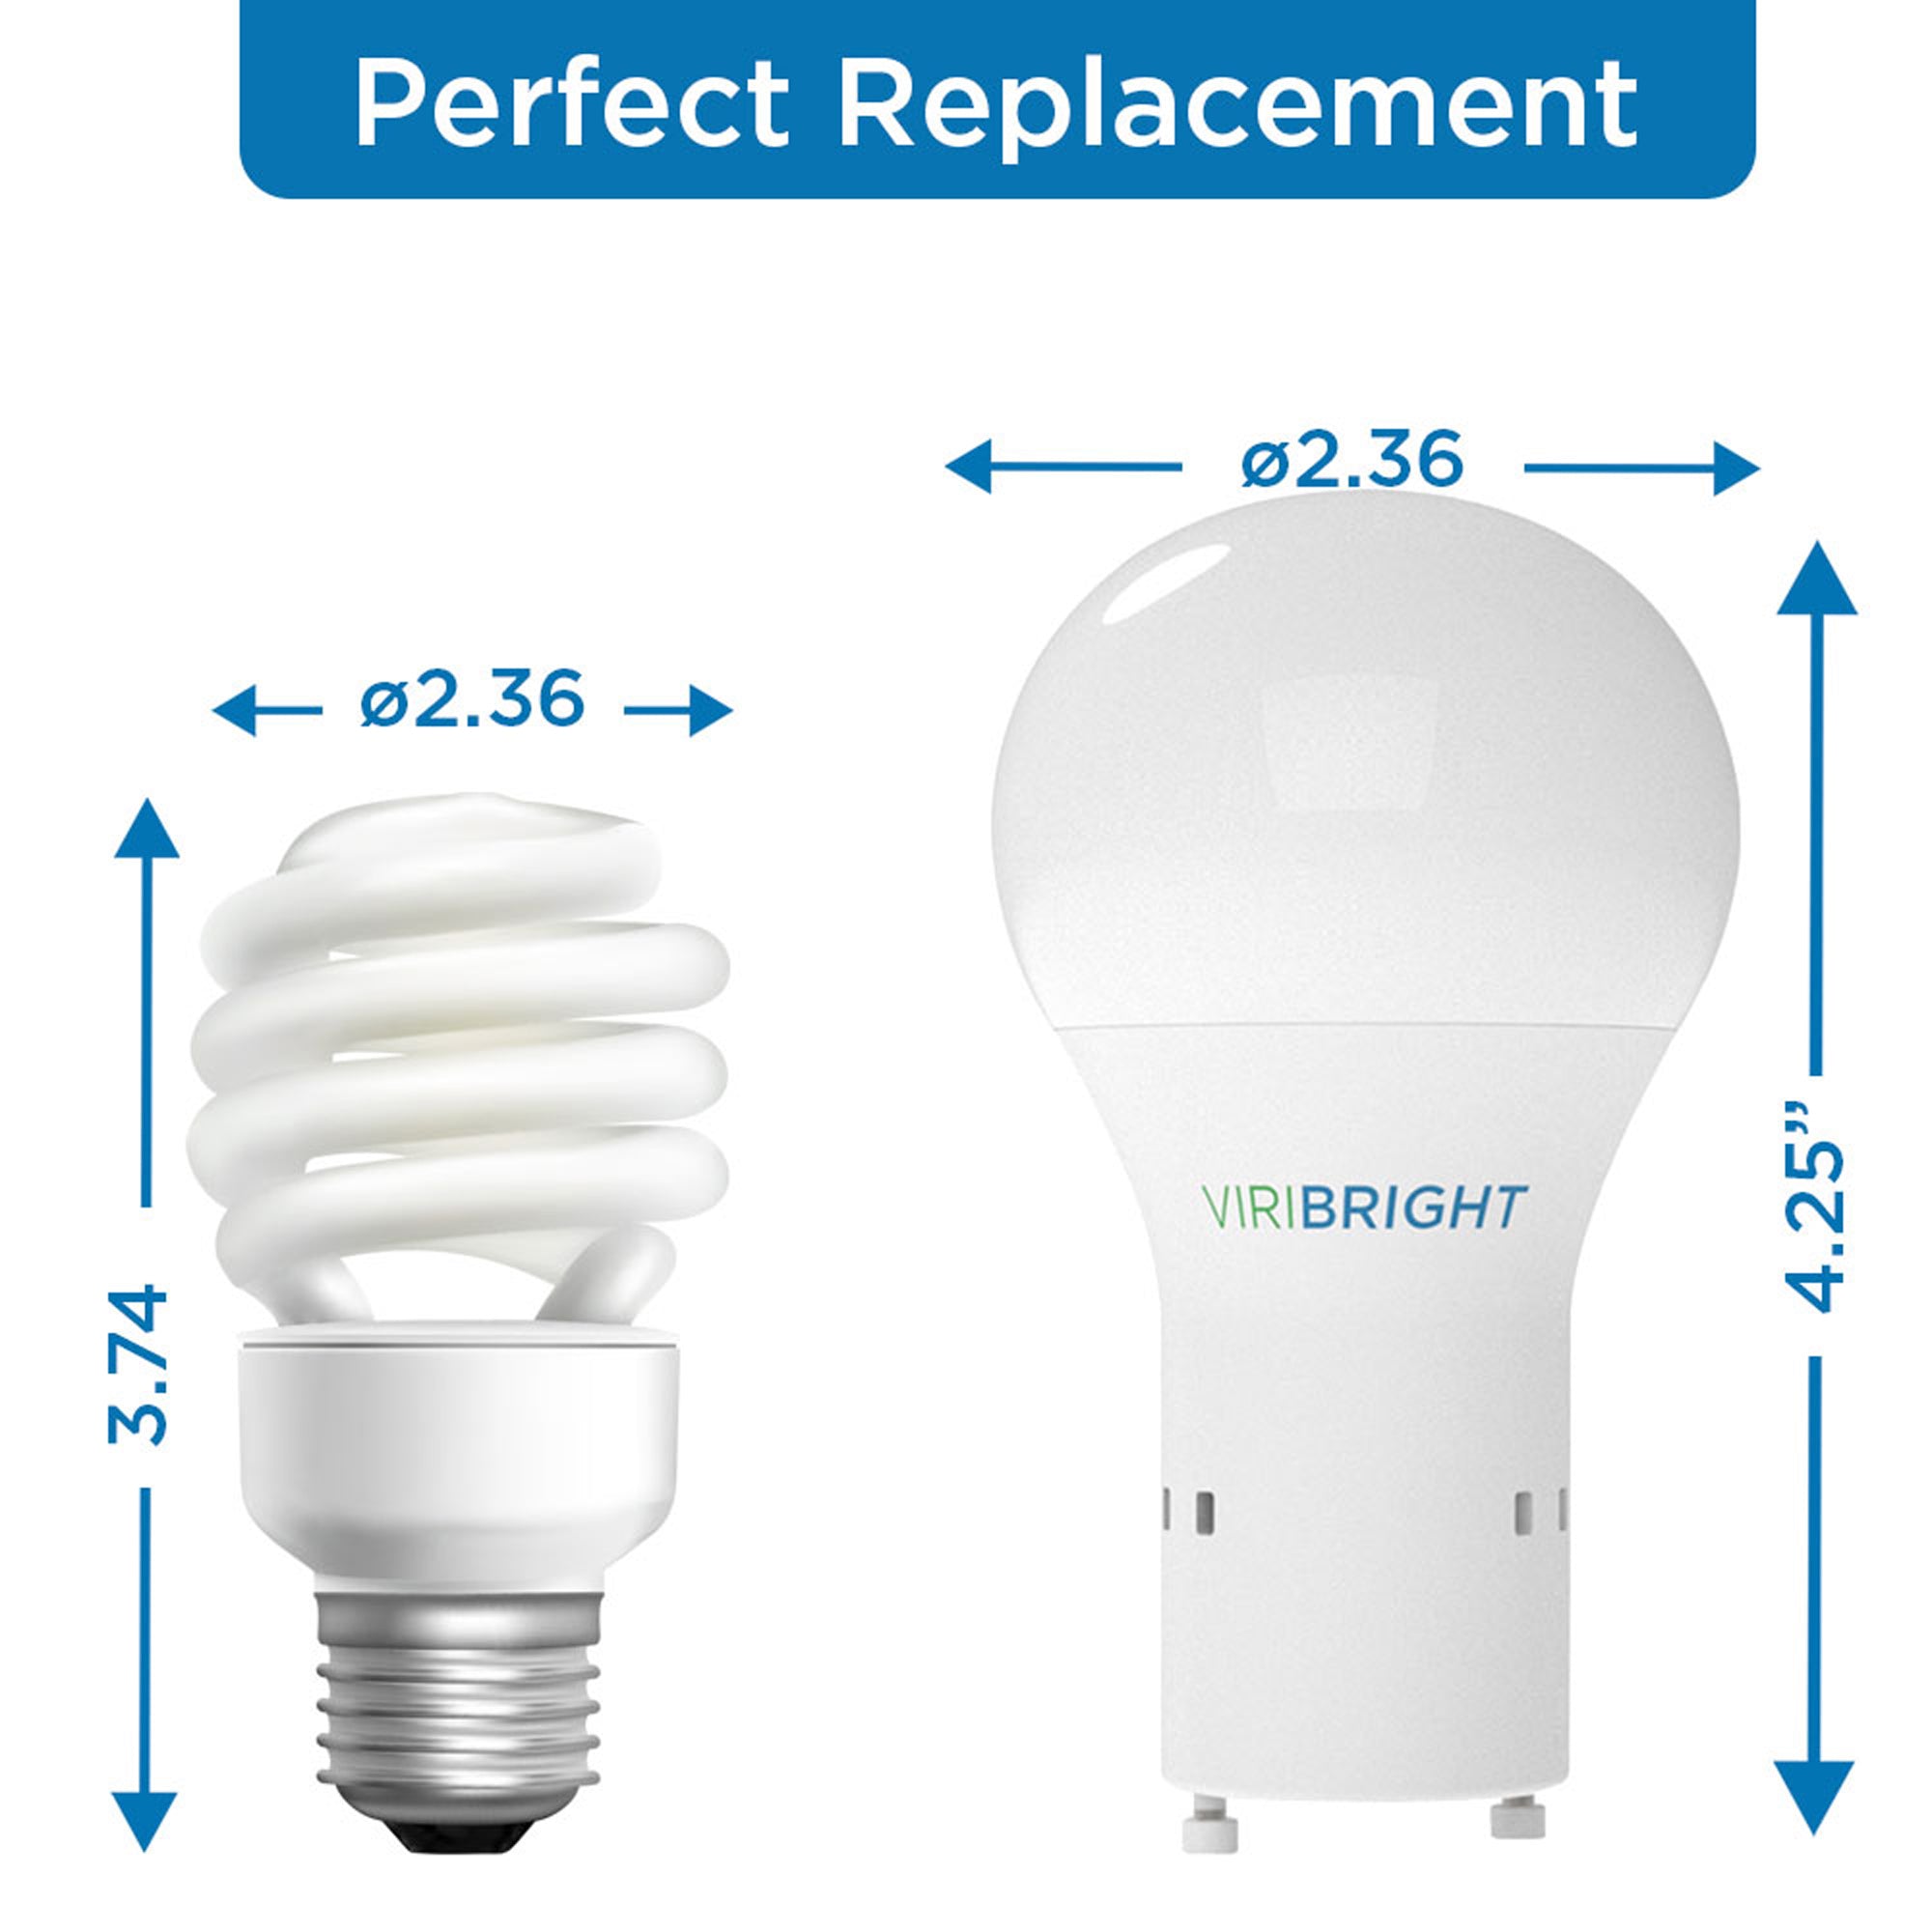 Viribright Energy Star 60-Watt Equivalent A19 GU24 Dimmable LED Light Bulb